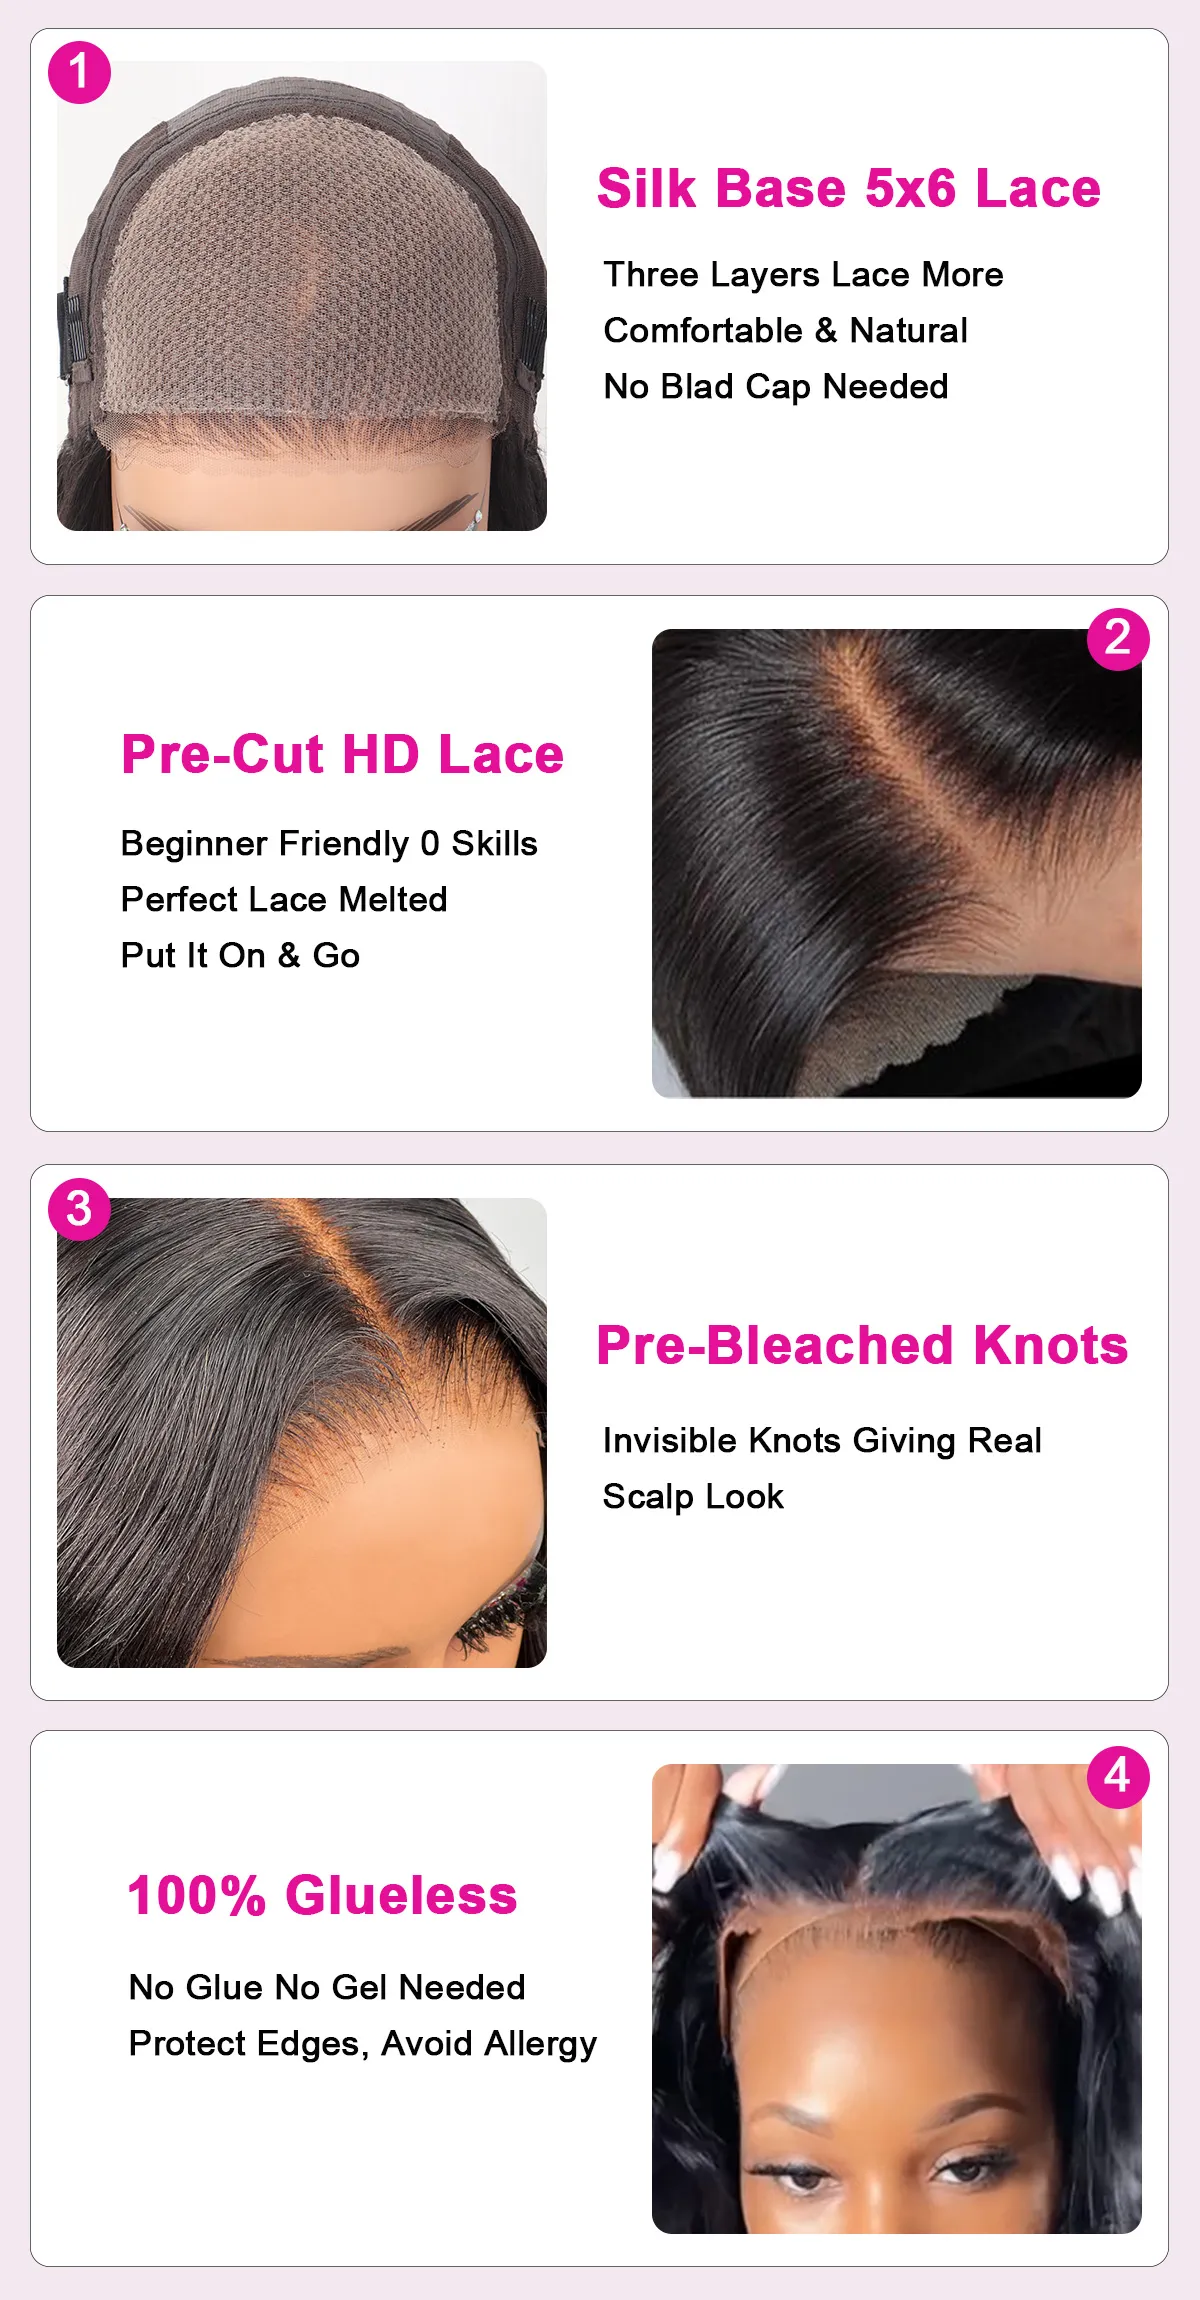 Tinashe hair silk base lace wig details (1)